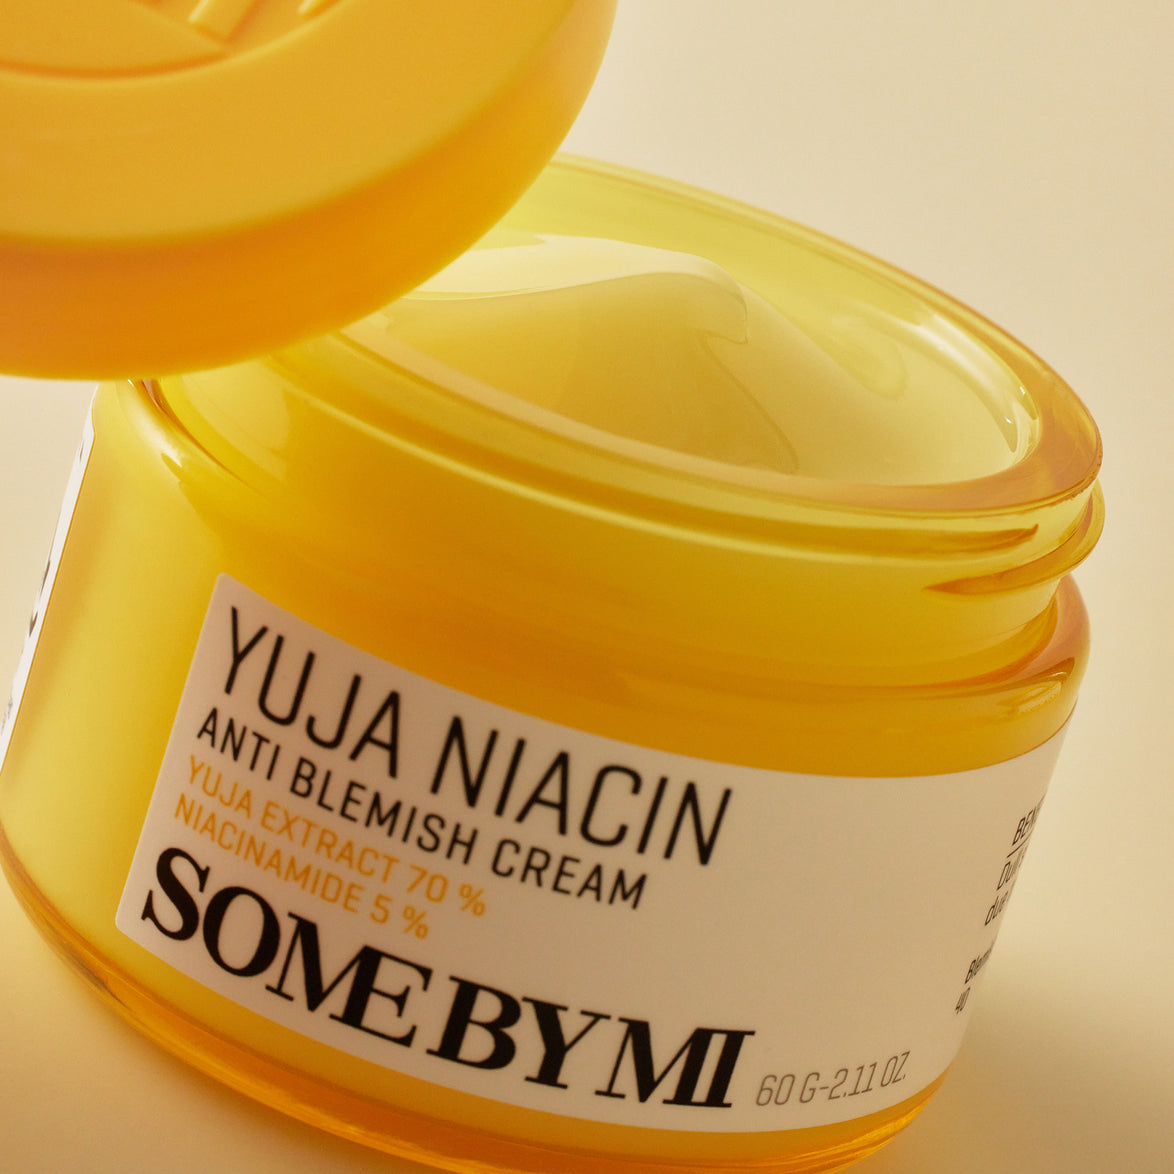 [SOME BY MI] Yuja Niacin Anti Blemish Cream 60g